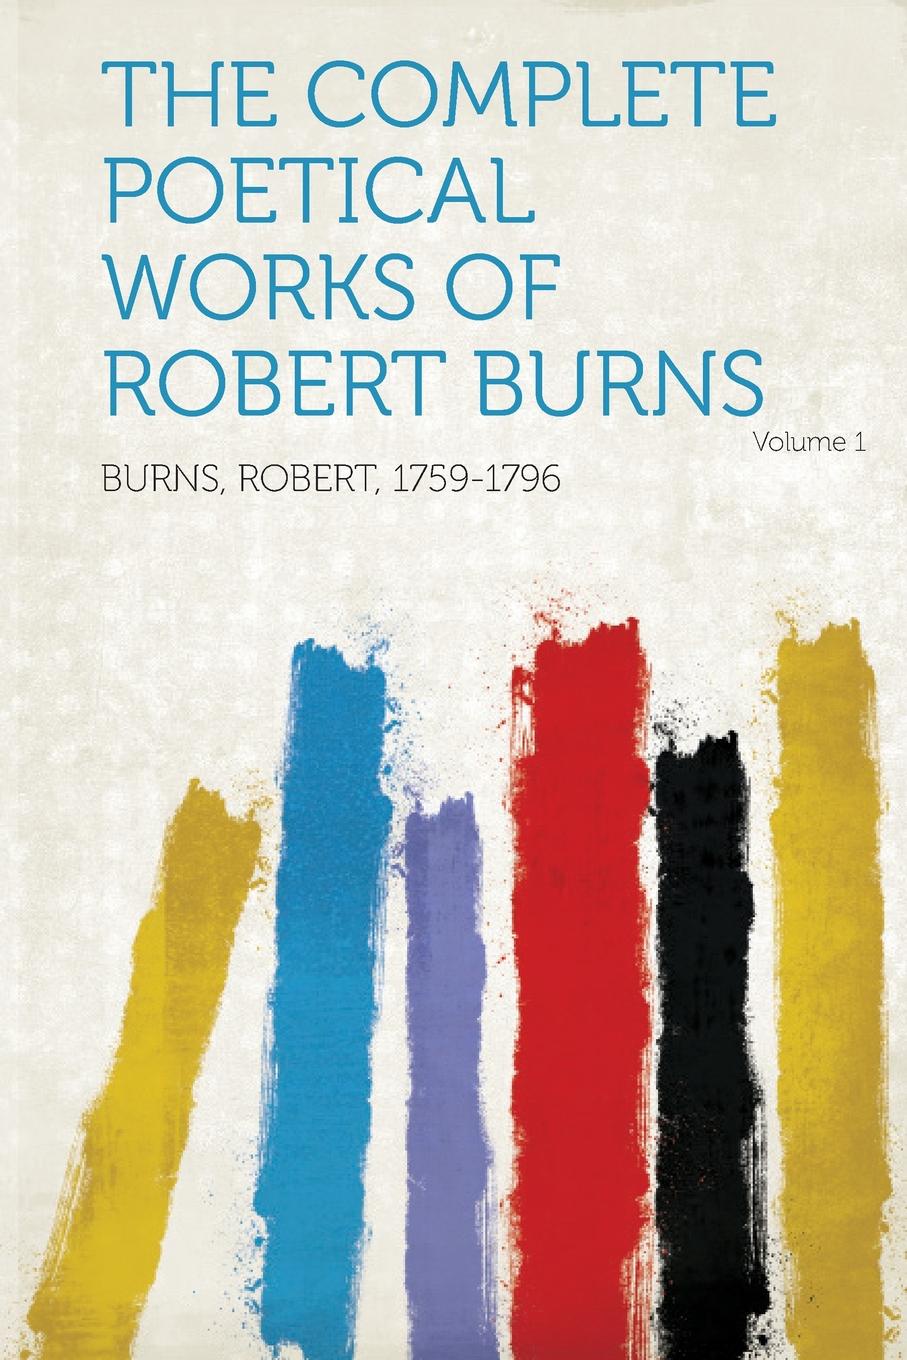 The Complete Poetical Works of Robert Burns Volume 1